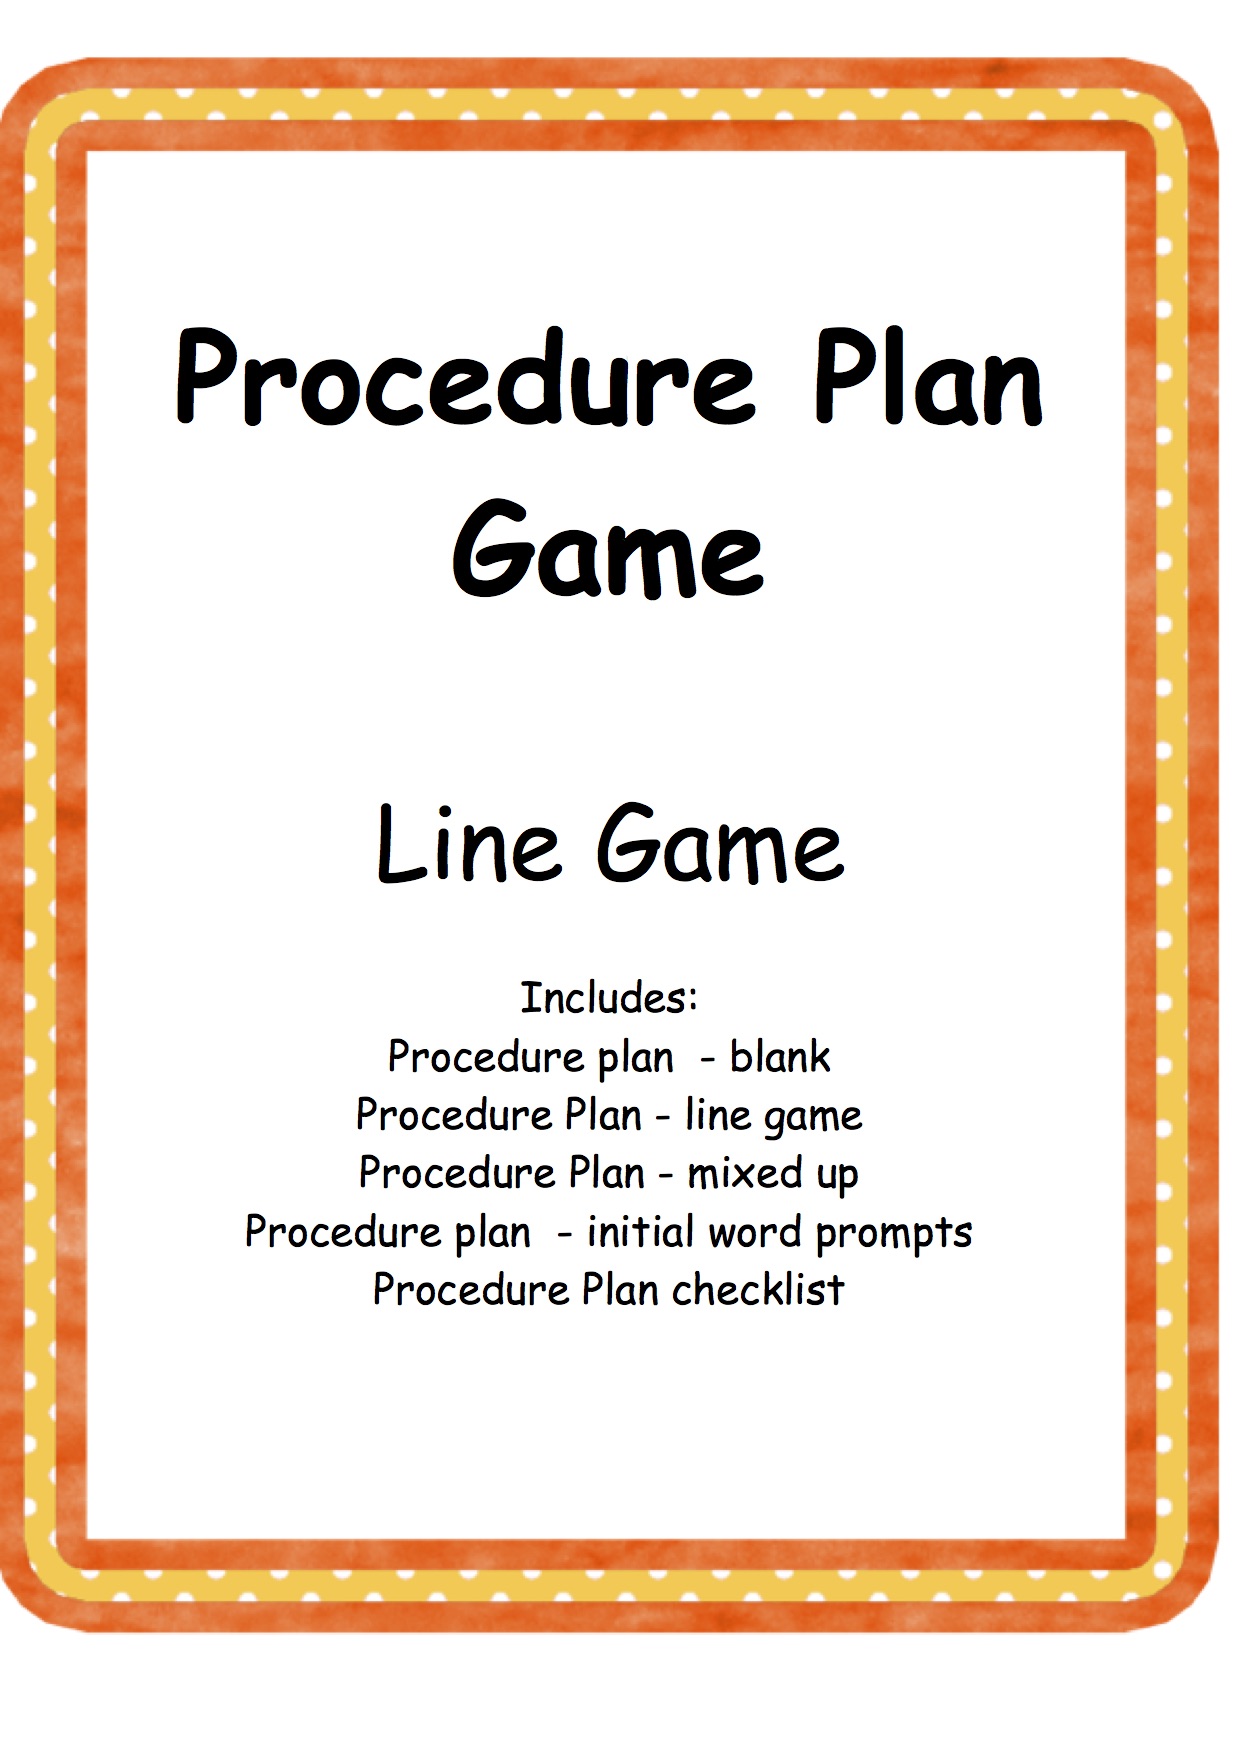 Procedure - Game -Line game